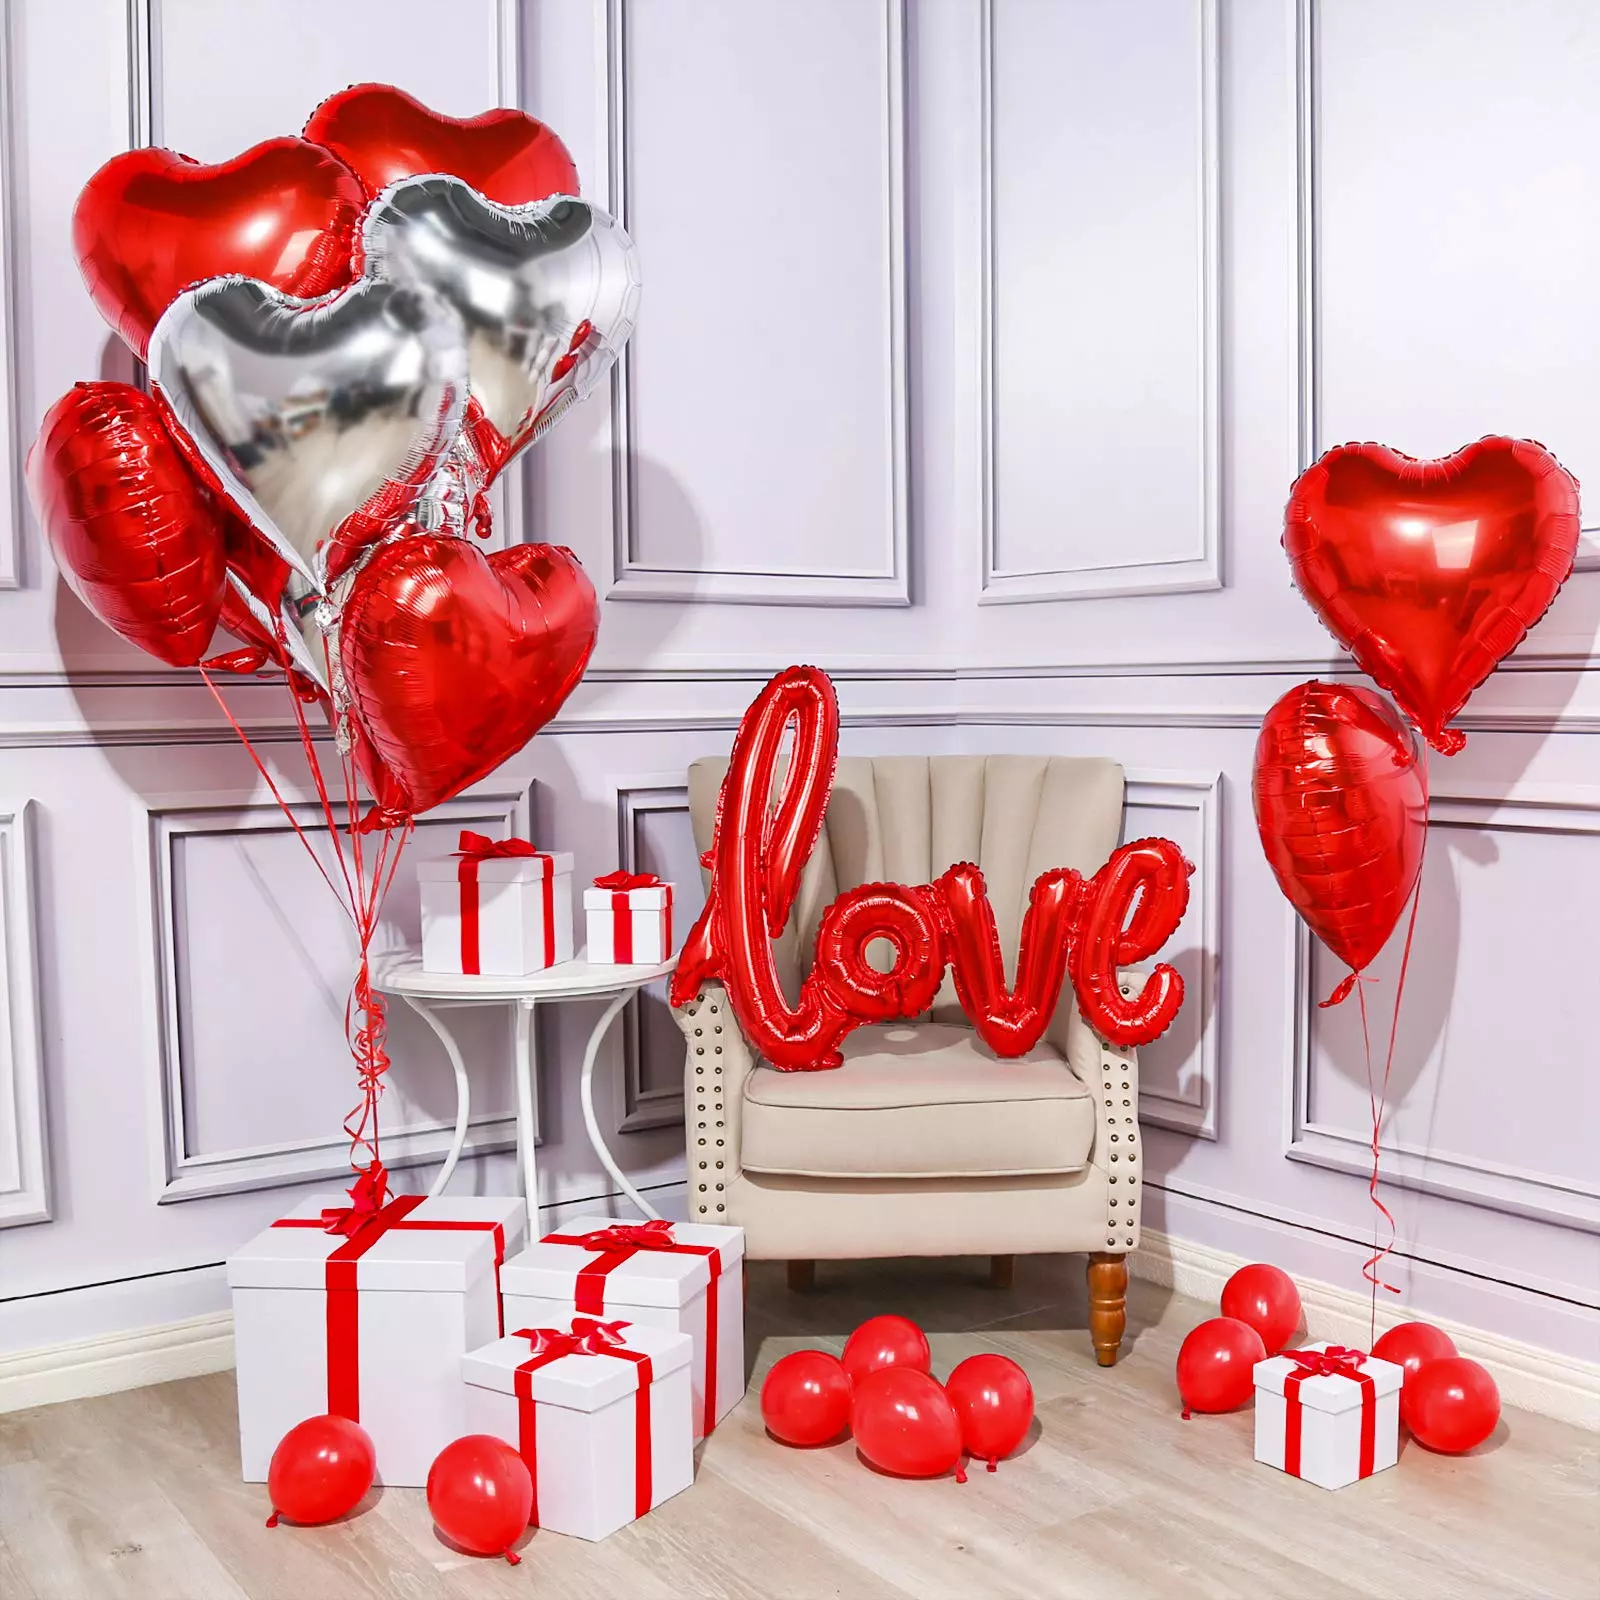 Valentine’s Day balloons